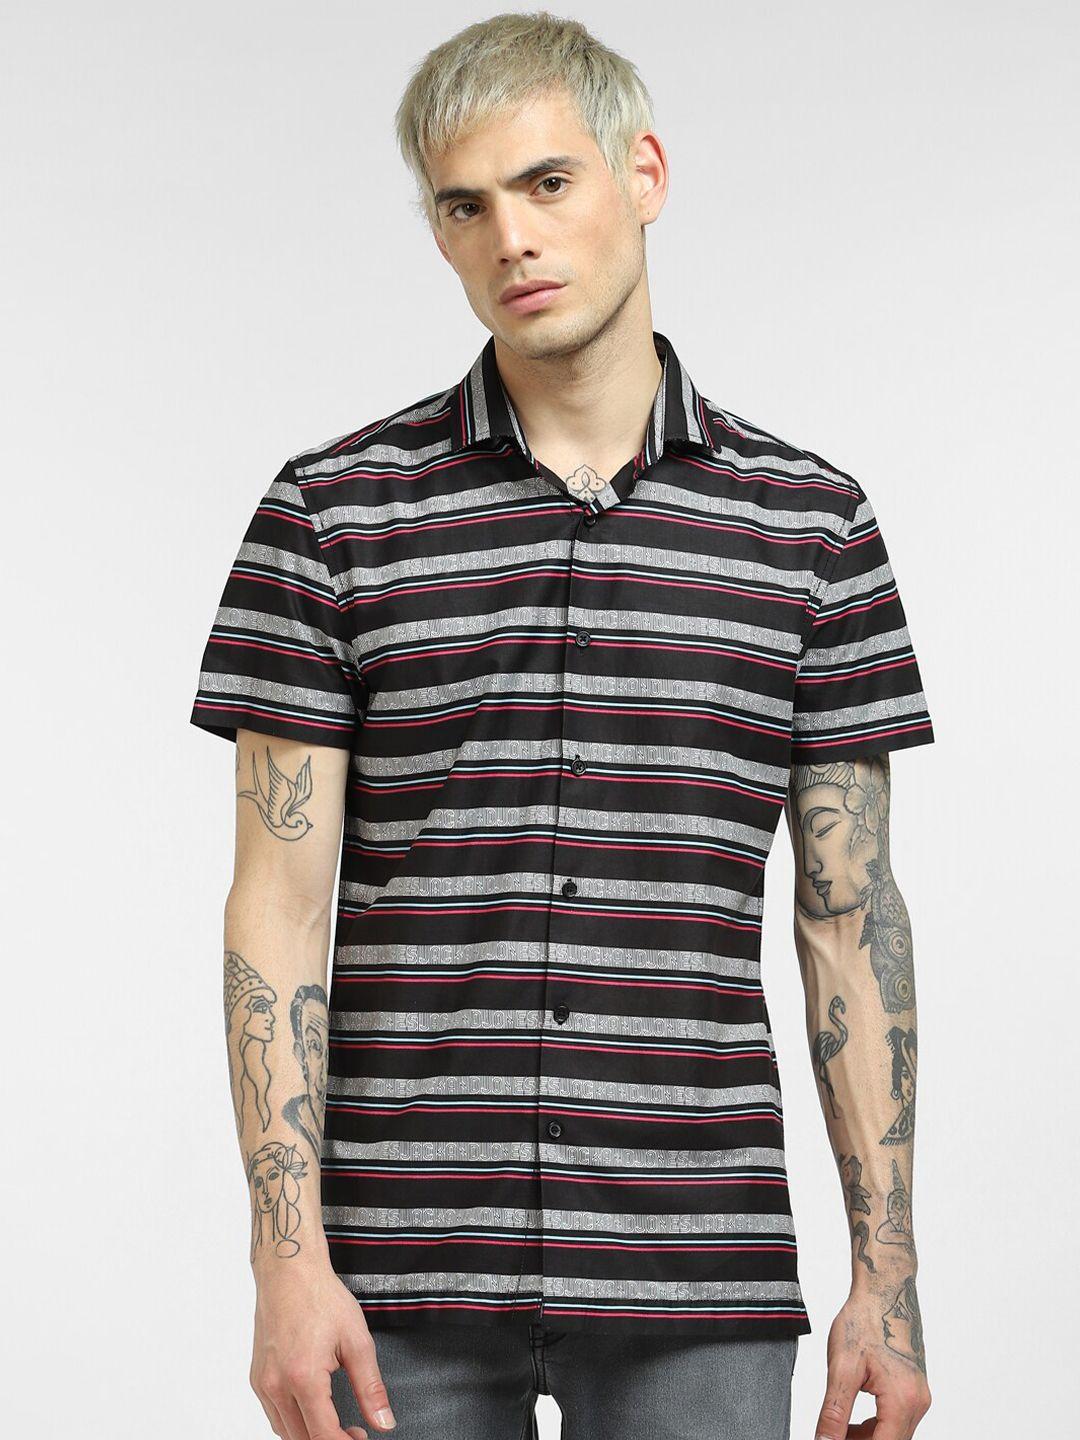 jack & jones men black & white horizontal stripes striped cotton casual shirt